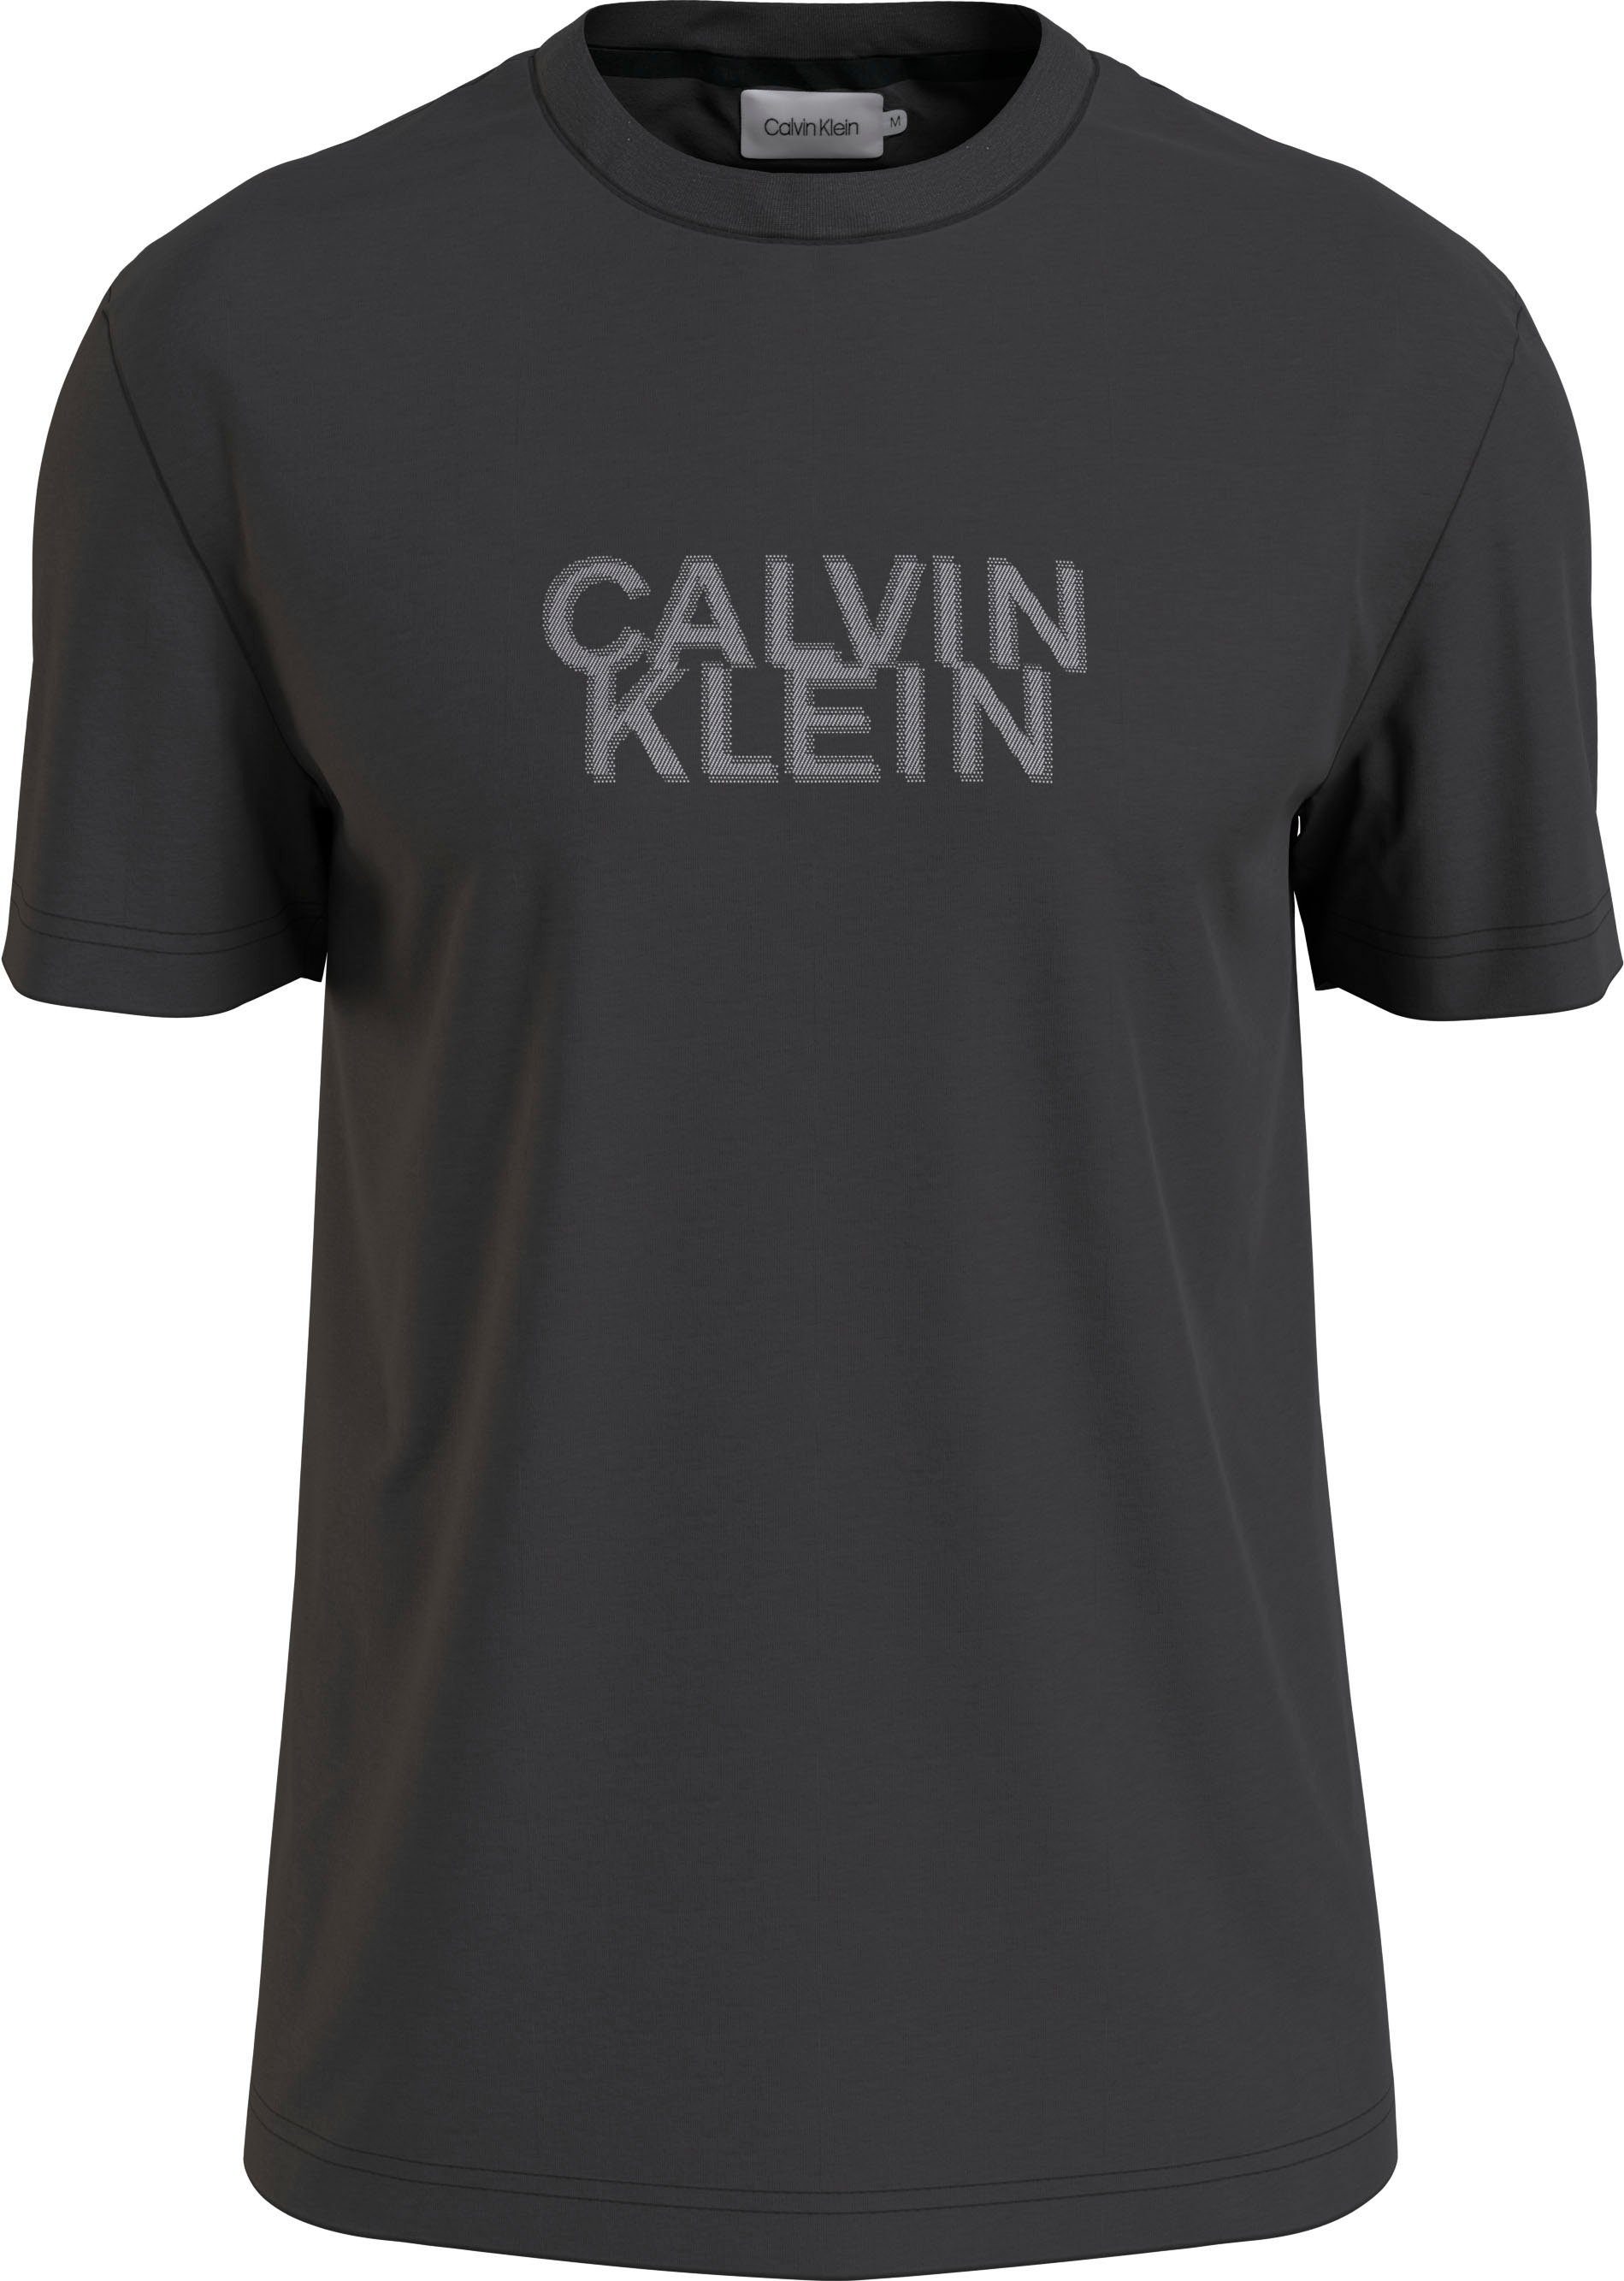 T-Shirt Calvin Klein black LOGO DISTORTED T-SHIRT